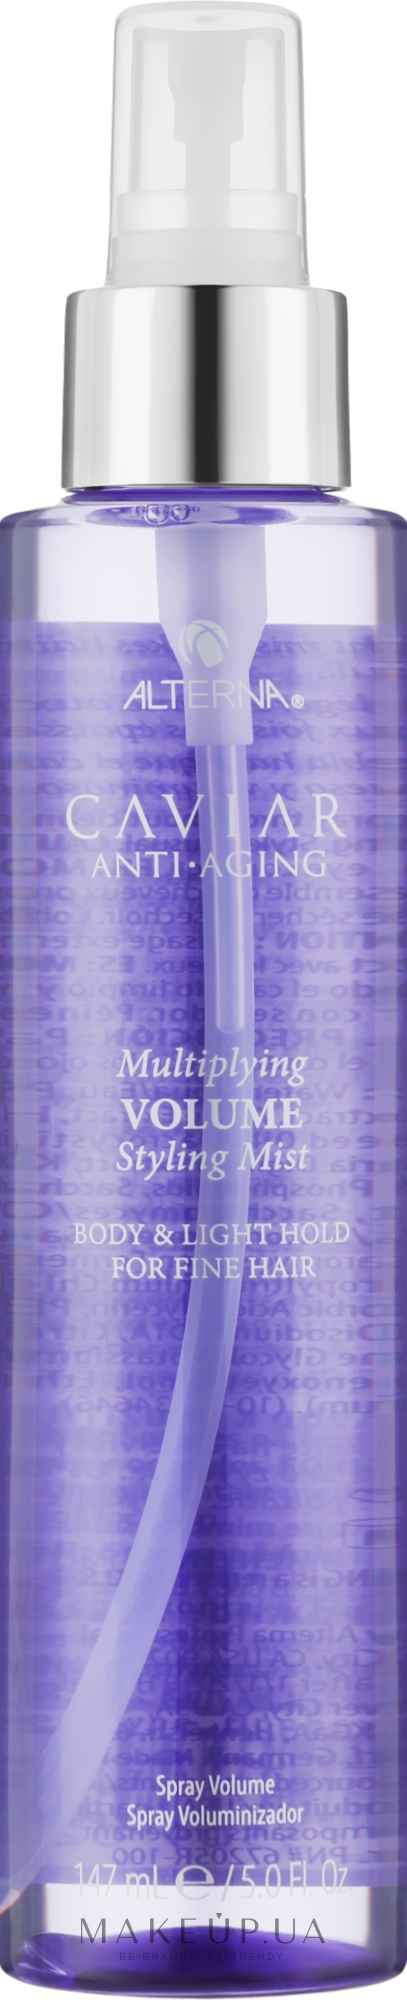 Спрей для обьема волос - Alterna Caviar Anti-Aging Multiplying Volume Styling Mist — фото 147ml